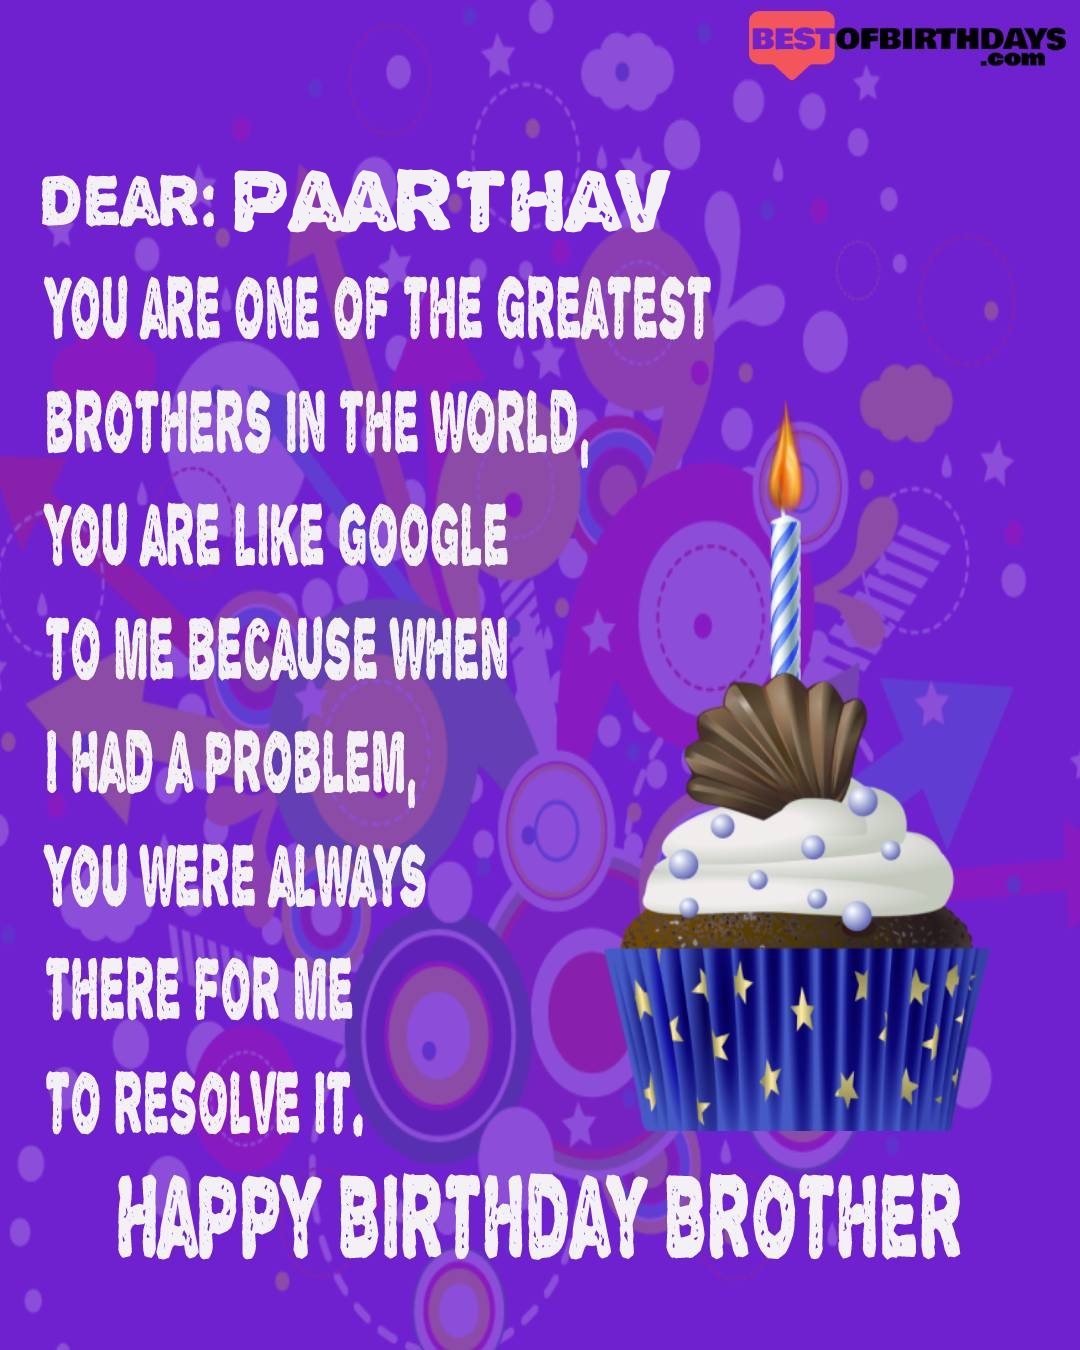 Happy birthday paarthav bhai brother bro